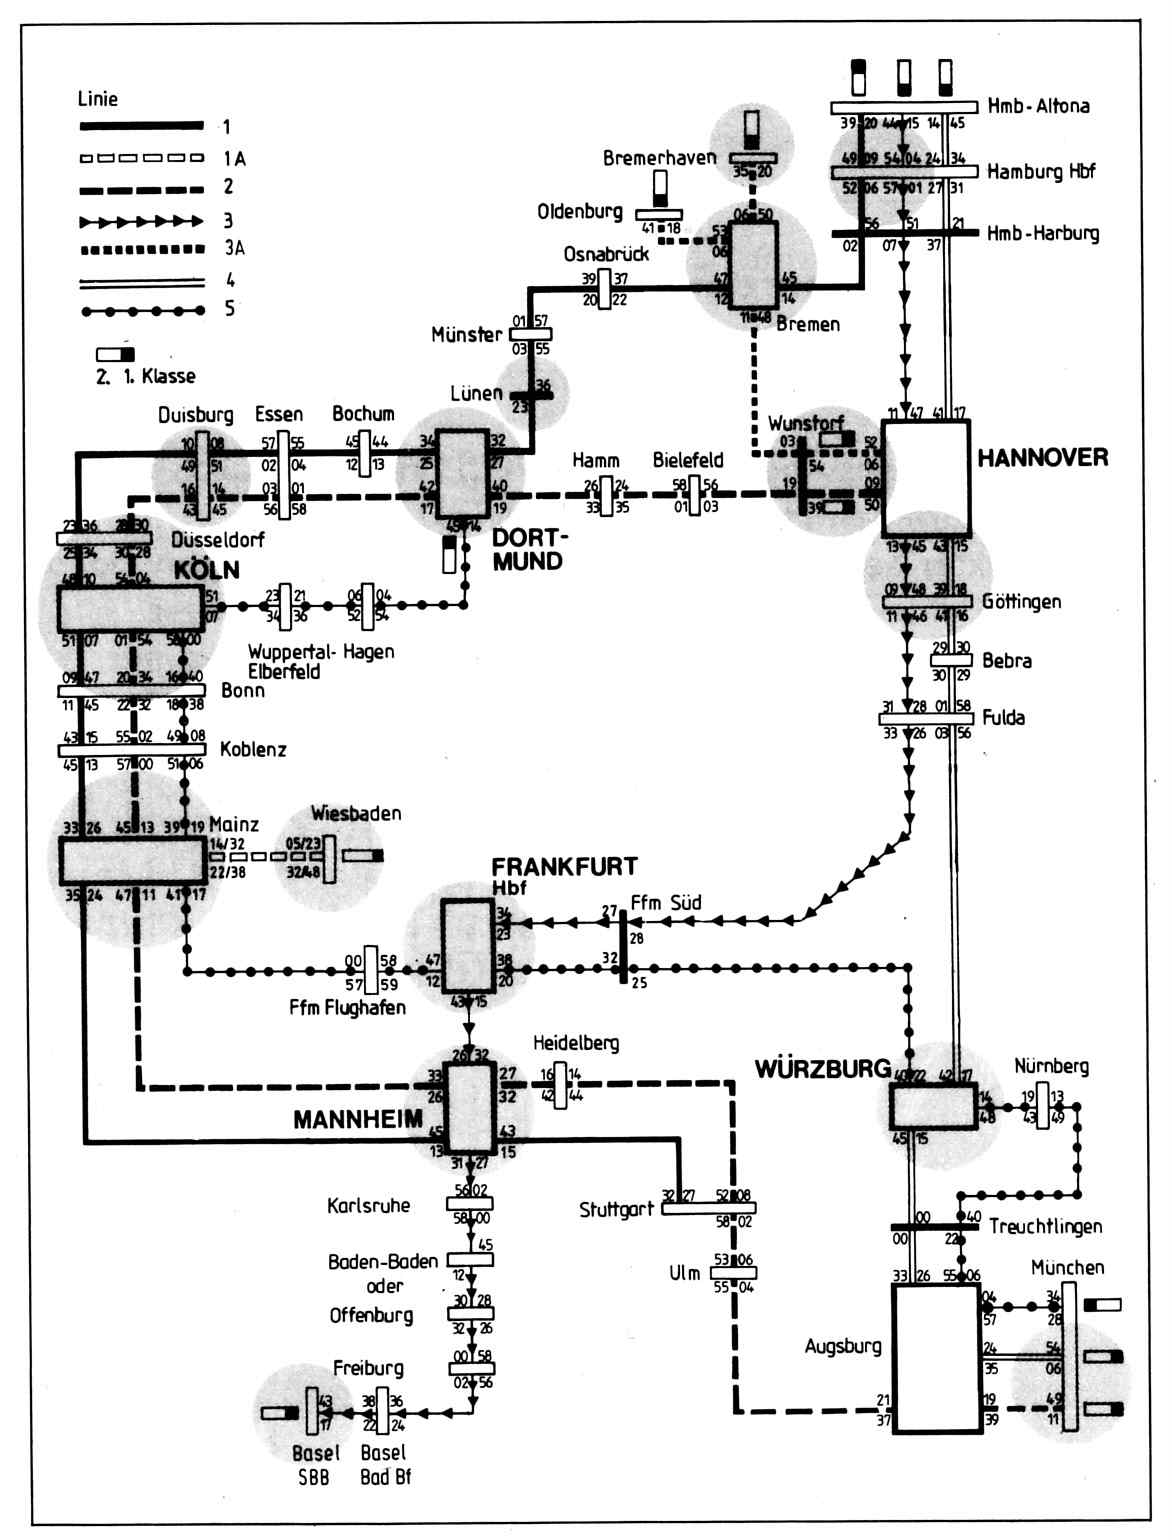 IC 네트워크, 1988/1989